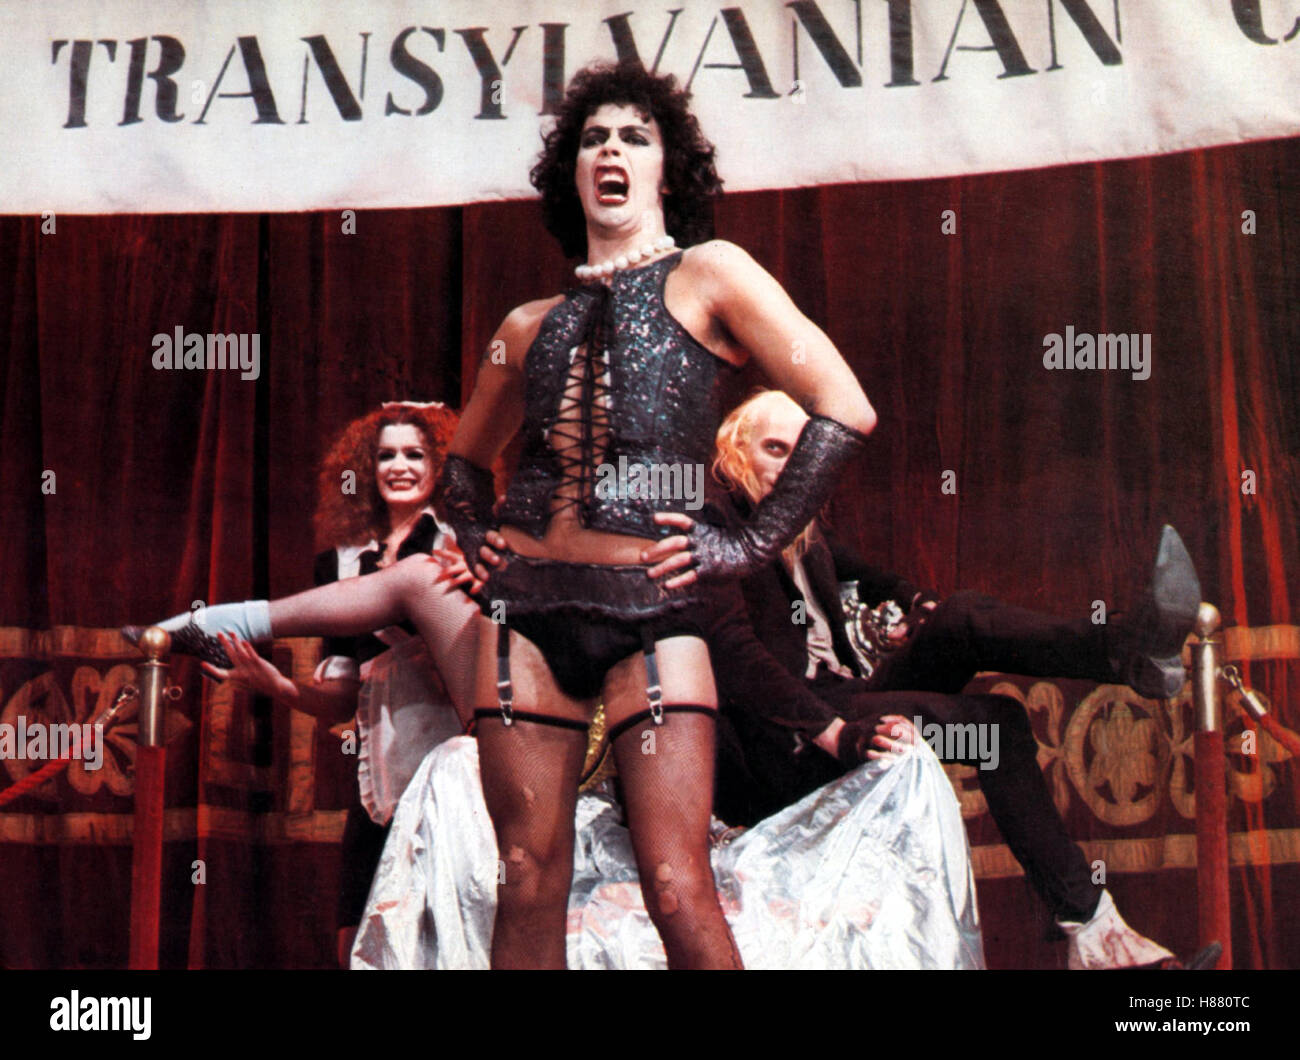 Die Rocky Horror Picture Show, (THE ROCKY HORROR PICTURE SHOW) USA 1974, Regie: Jim Sharman, PATRICIA QUINN, TIM CURRY, RICHARD O'BRIEN, Stichwort: Transvestit, Strapse, Weste, Slip Stock Photo